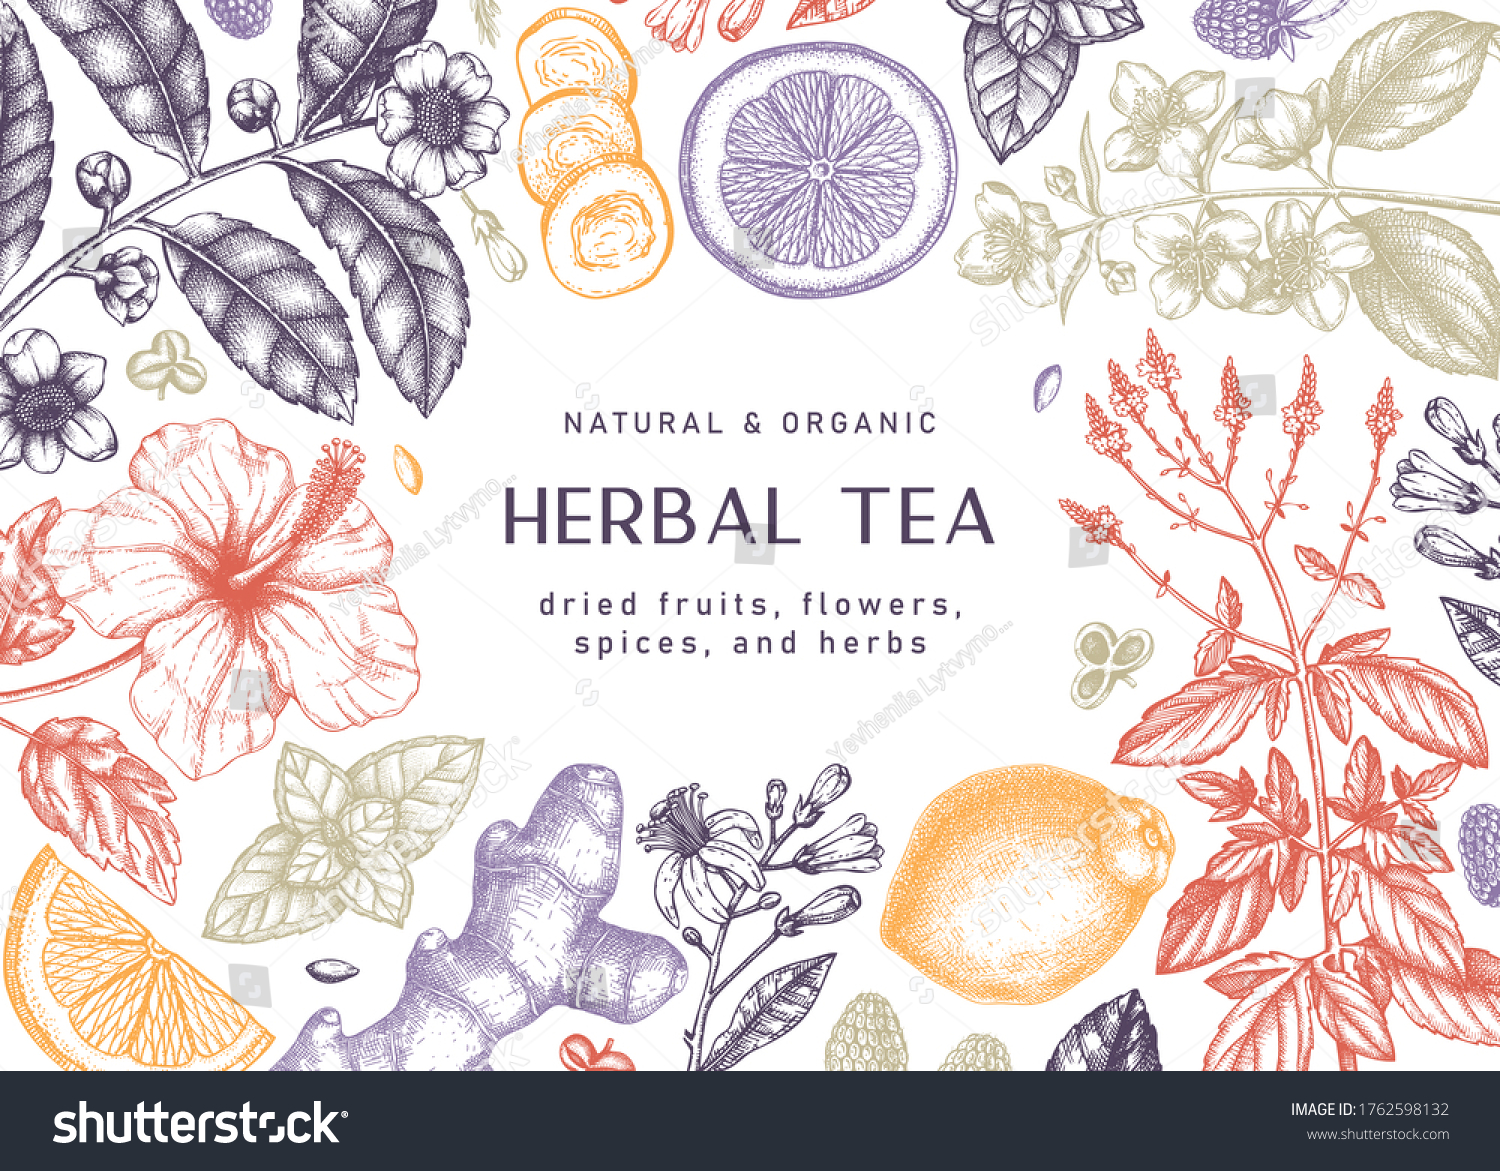 Hand sketched herbal tea ingredients banner. Vintage herbs, leaves, flowers, fruits hand drawings background. Perfect for recipe, menu, label, packaging. Herbal tea template.  Botanical illustration. #1762598132